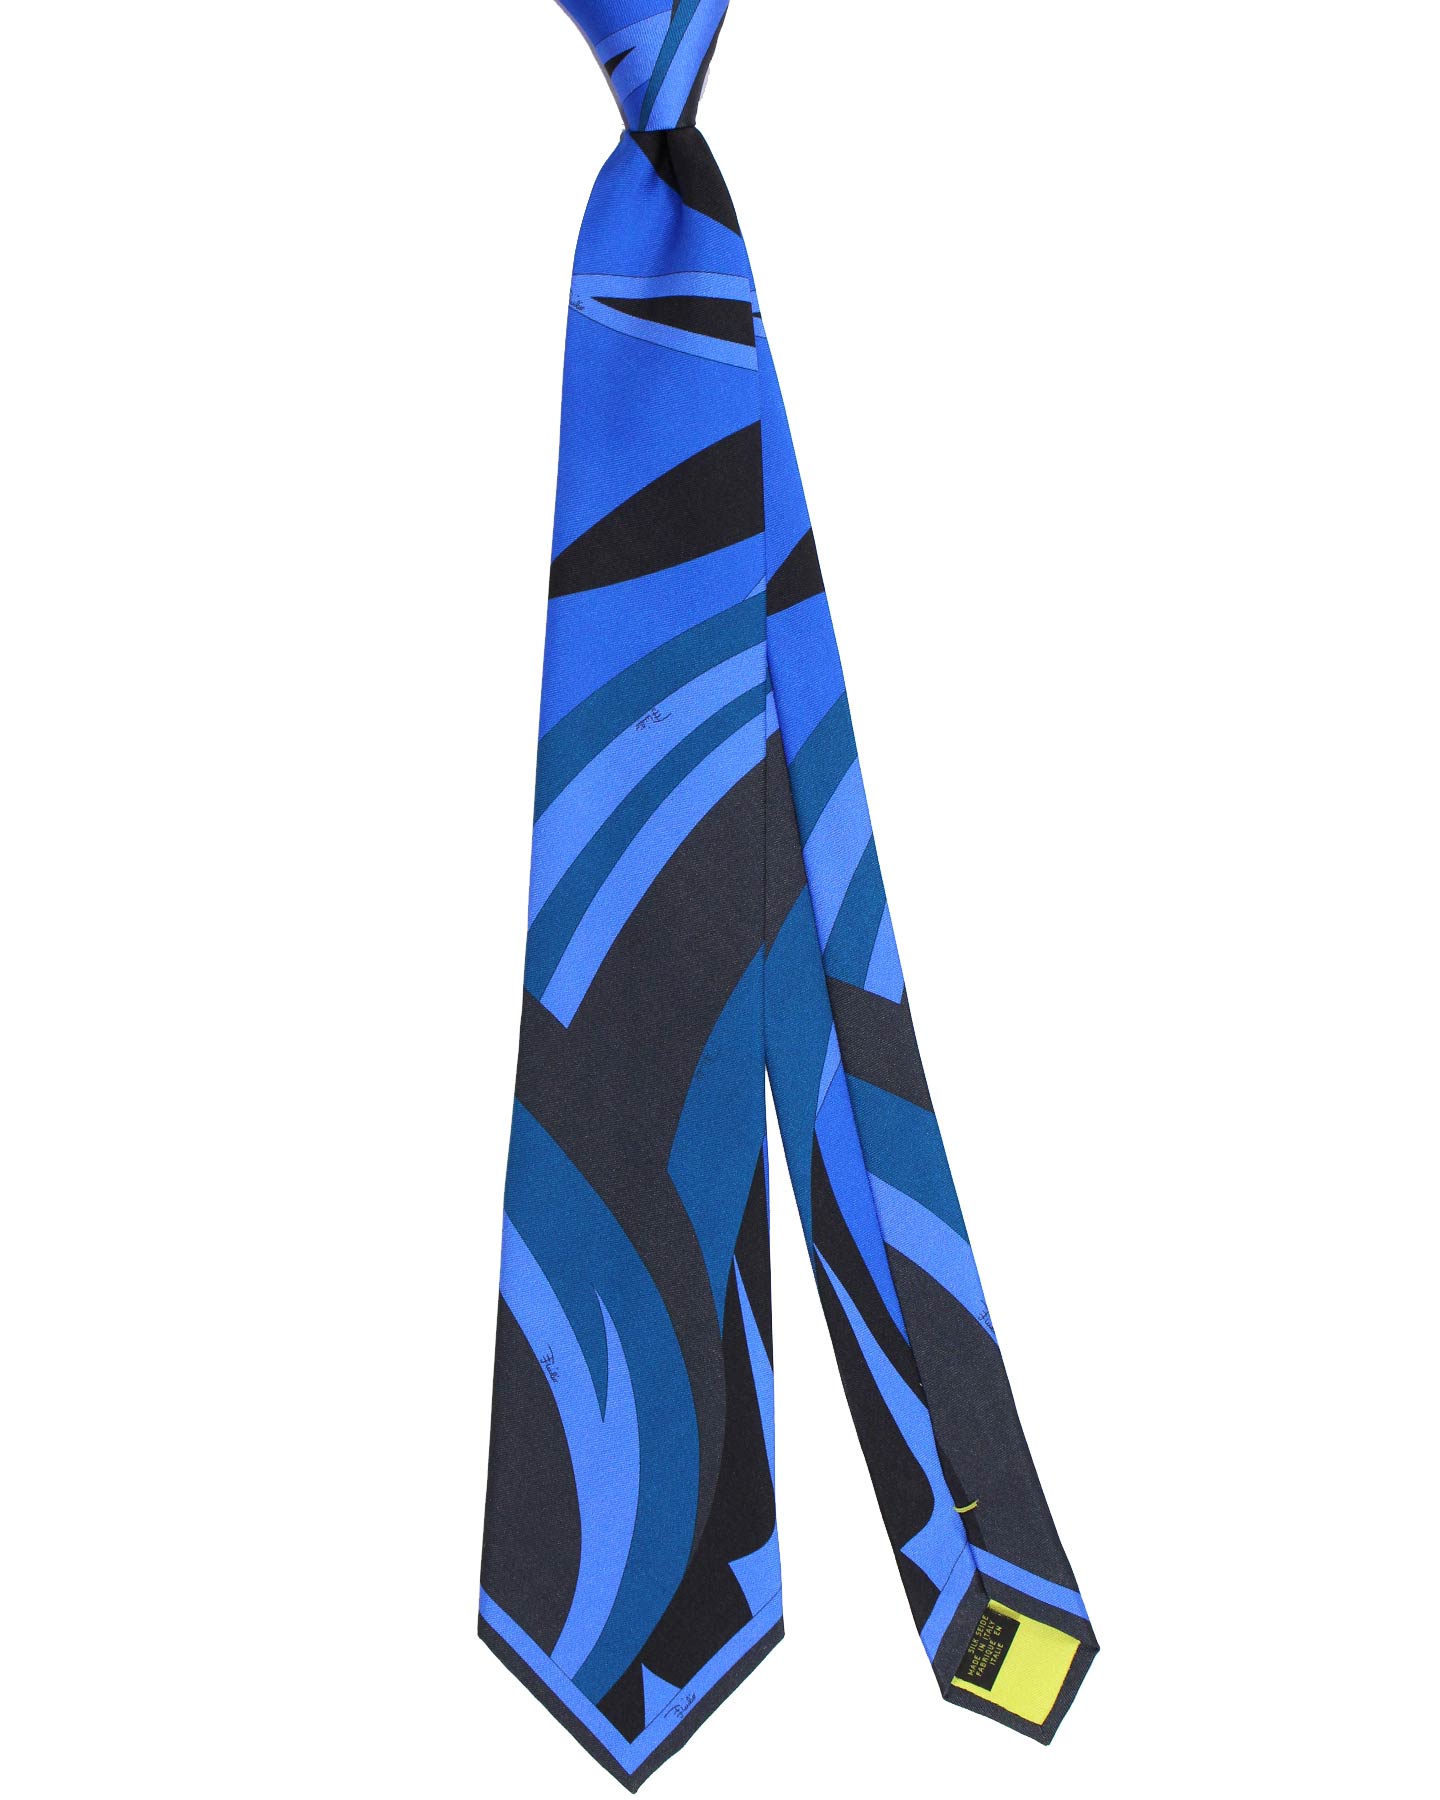 Emilio Pucci Silk Tie Signature Dark Blue SALE - Tie Deals